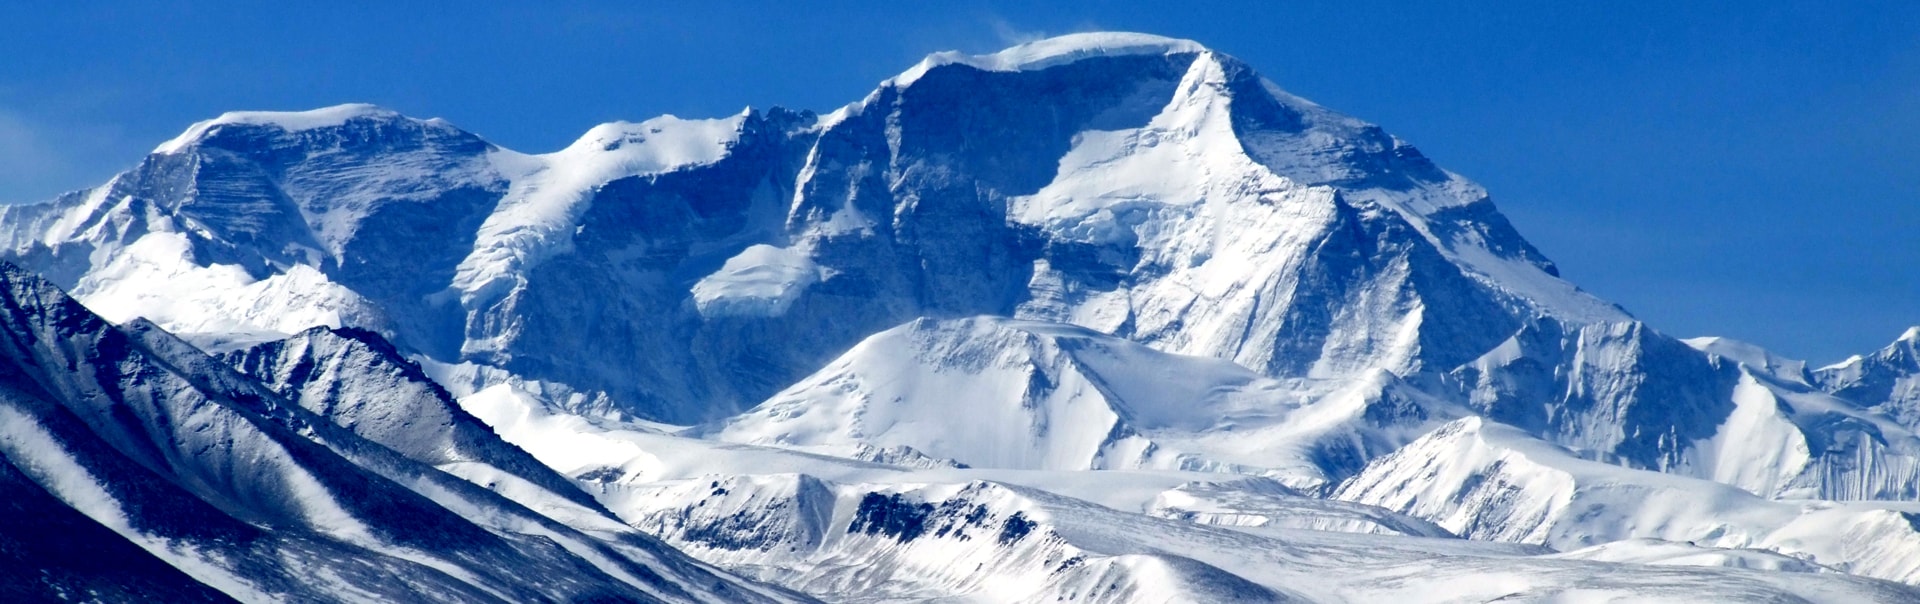 Everest – Cho Oyu – Sishapangma Base Camp Trek